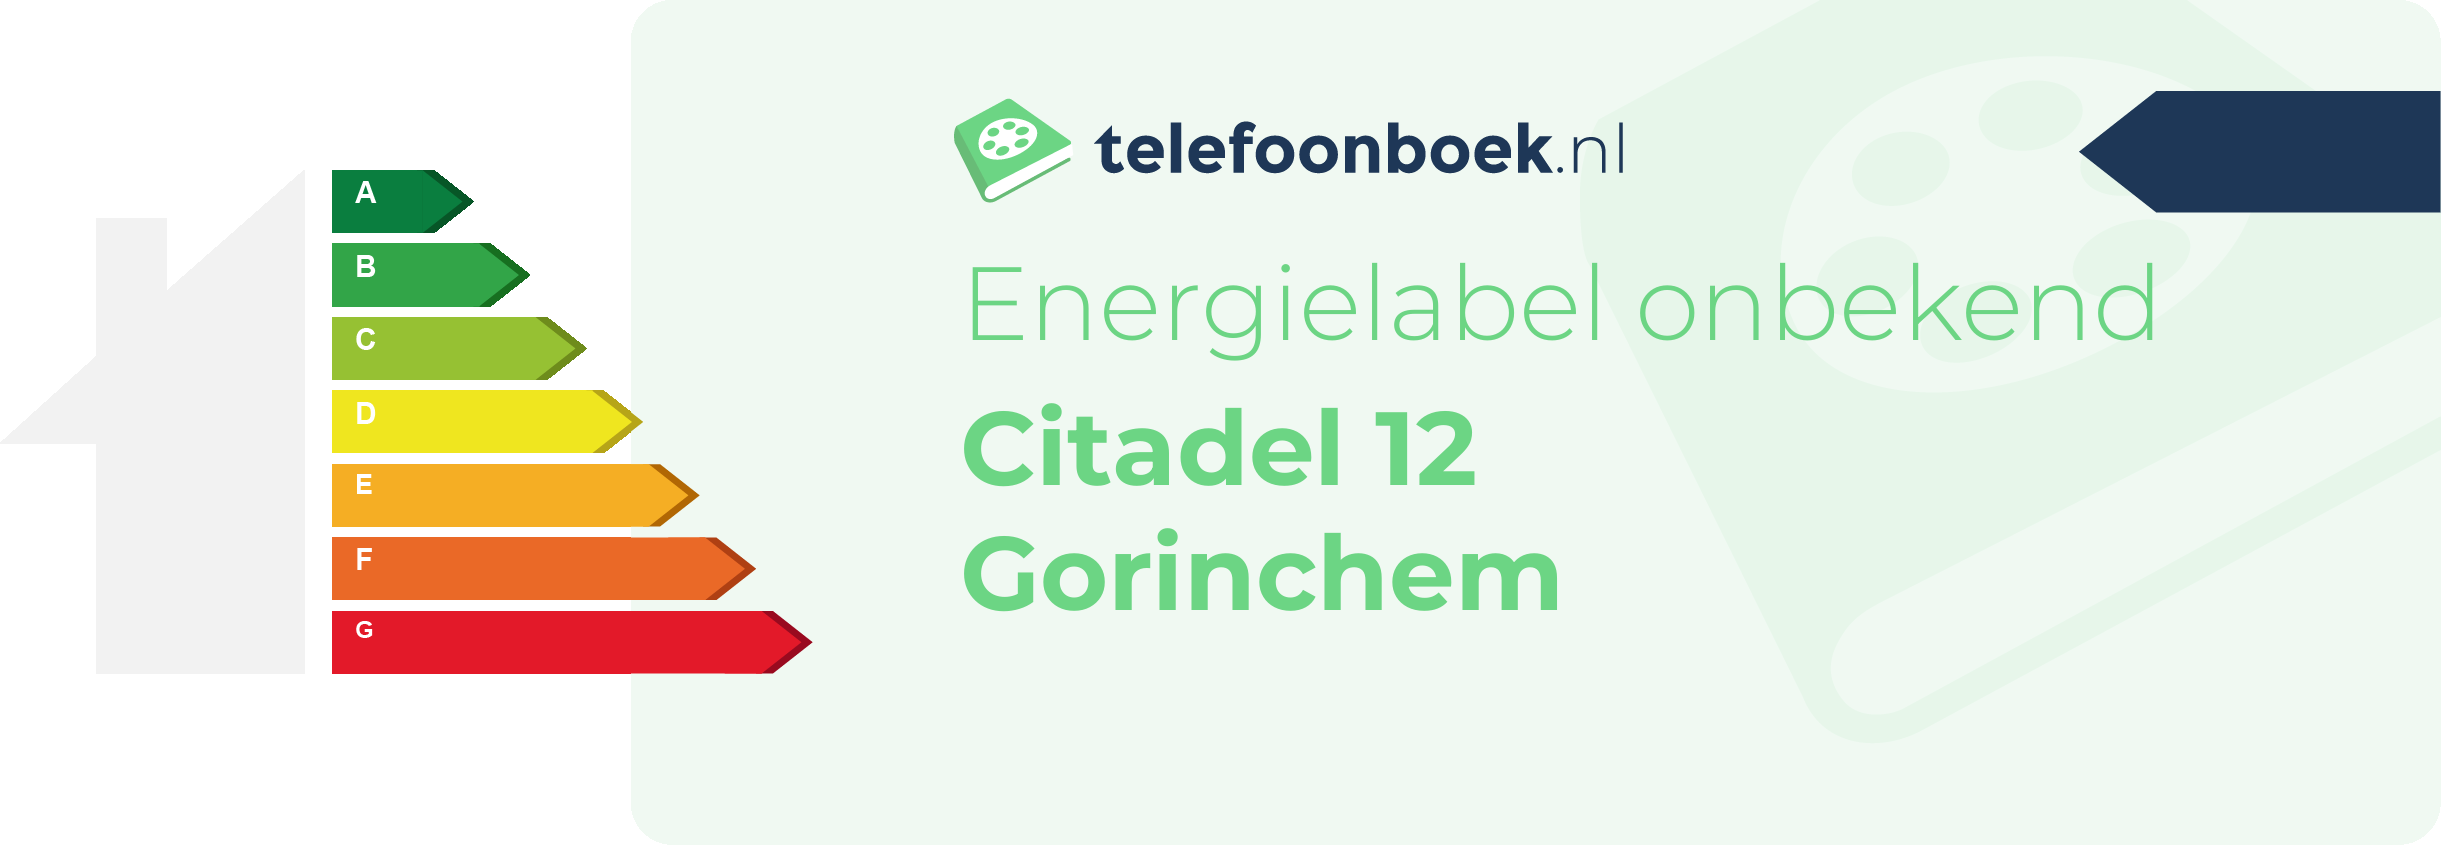 Energielabel Citadel 12 Gorinchem